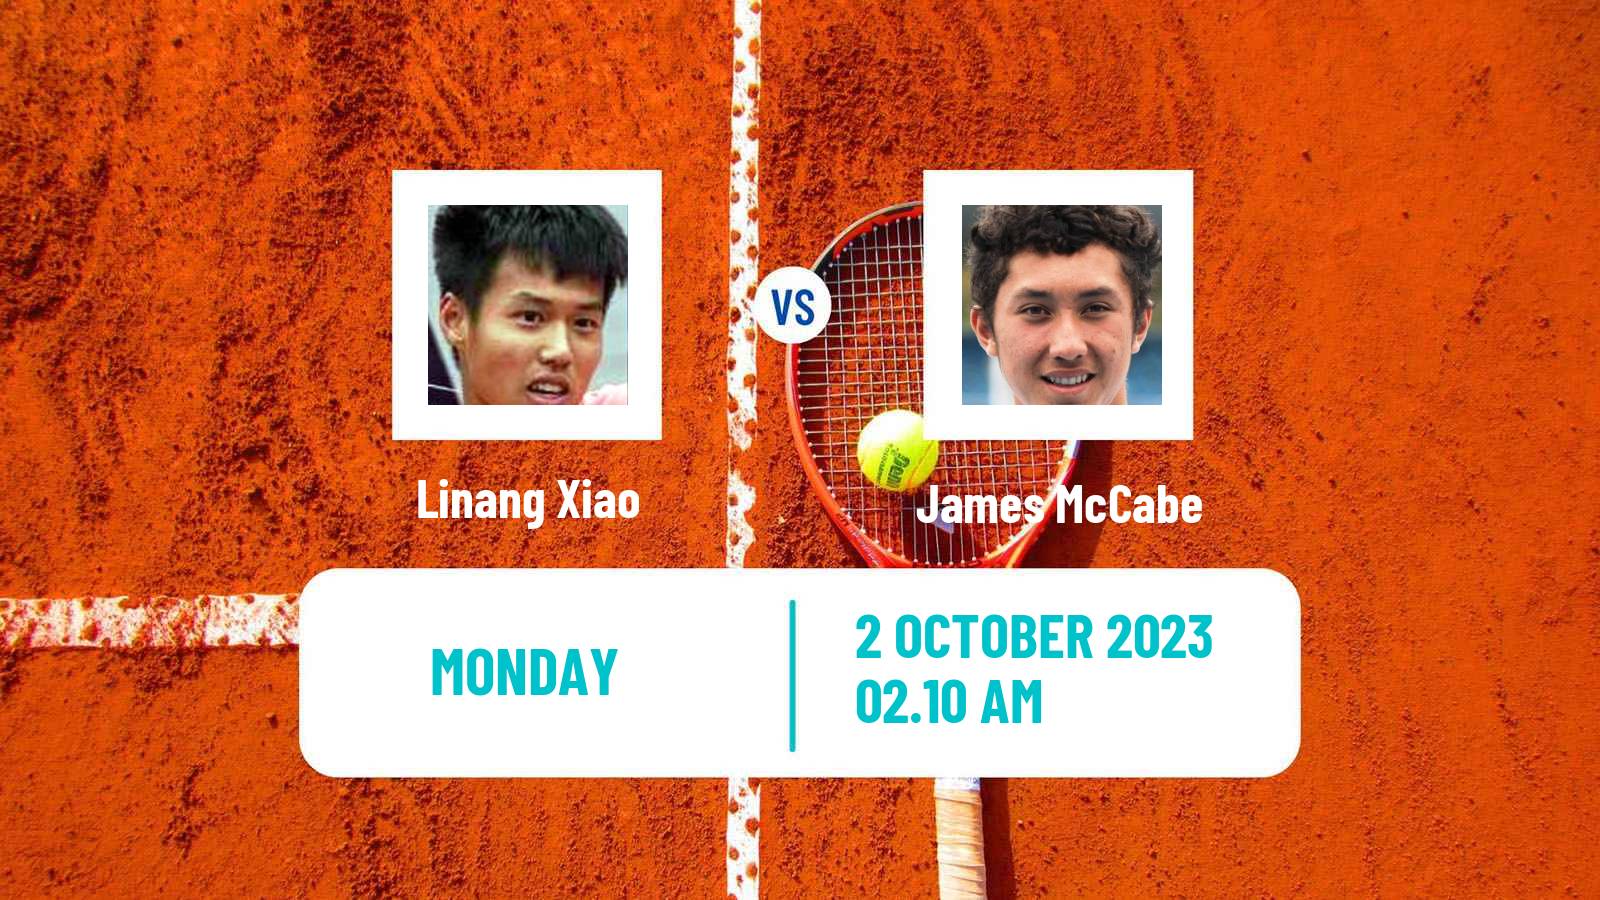 Tennis ATP Shanghai Linang Xiao - James McCabe